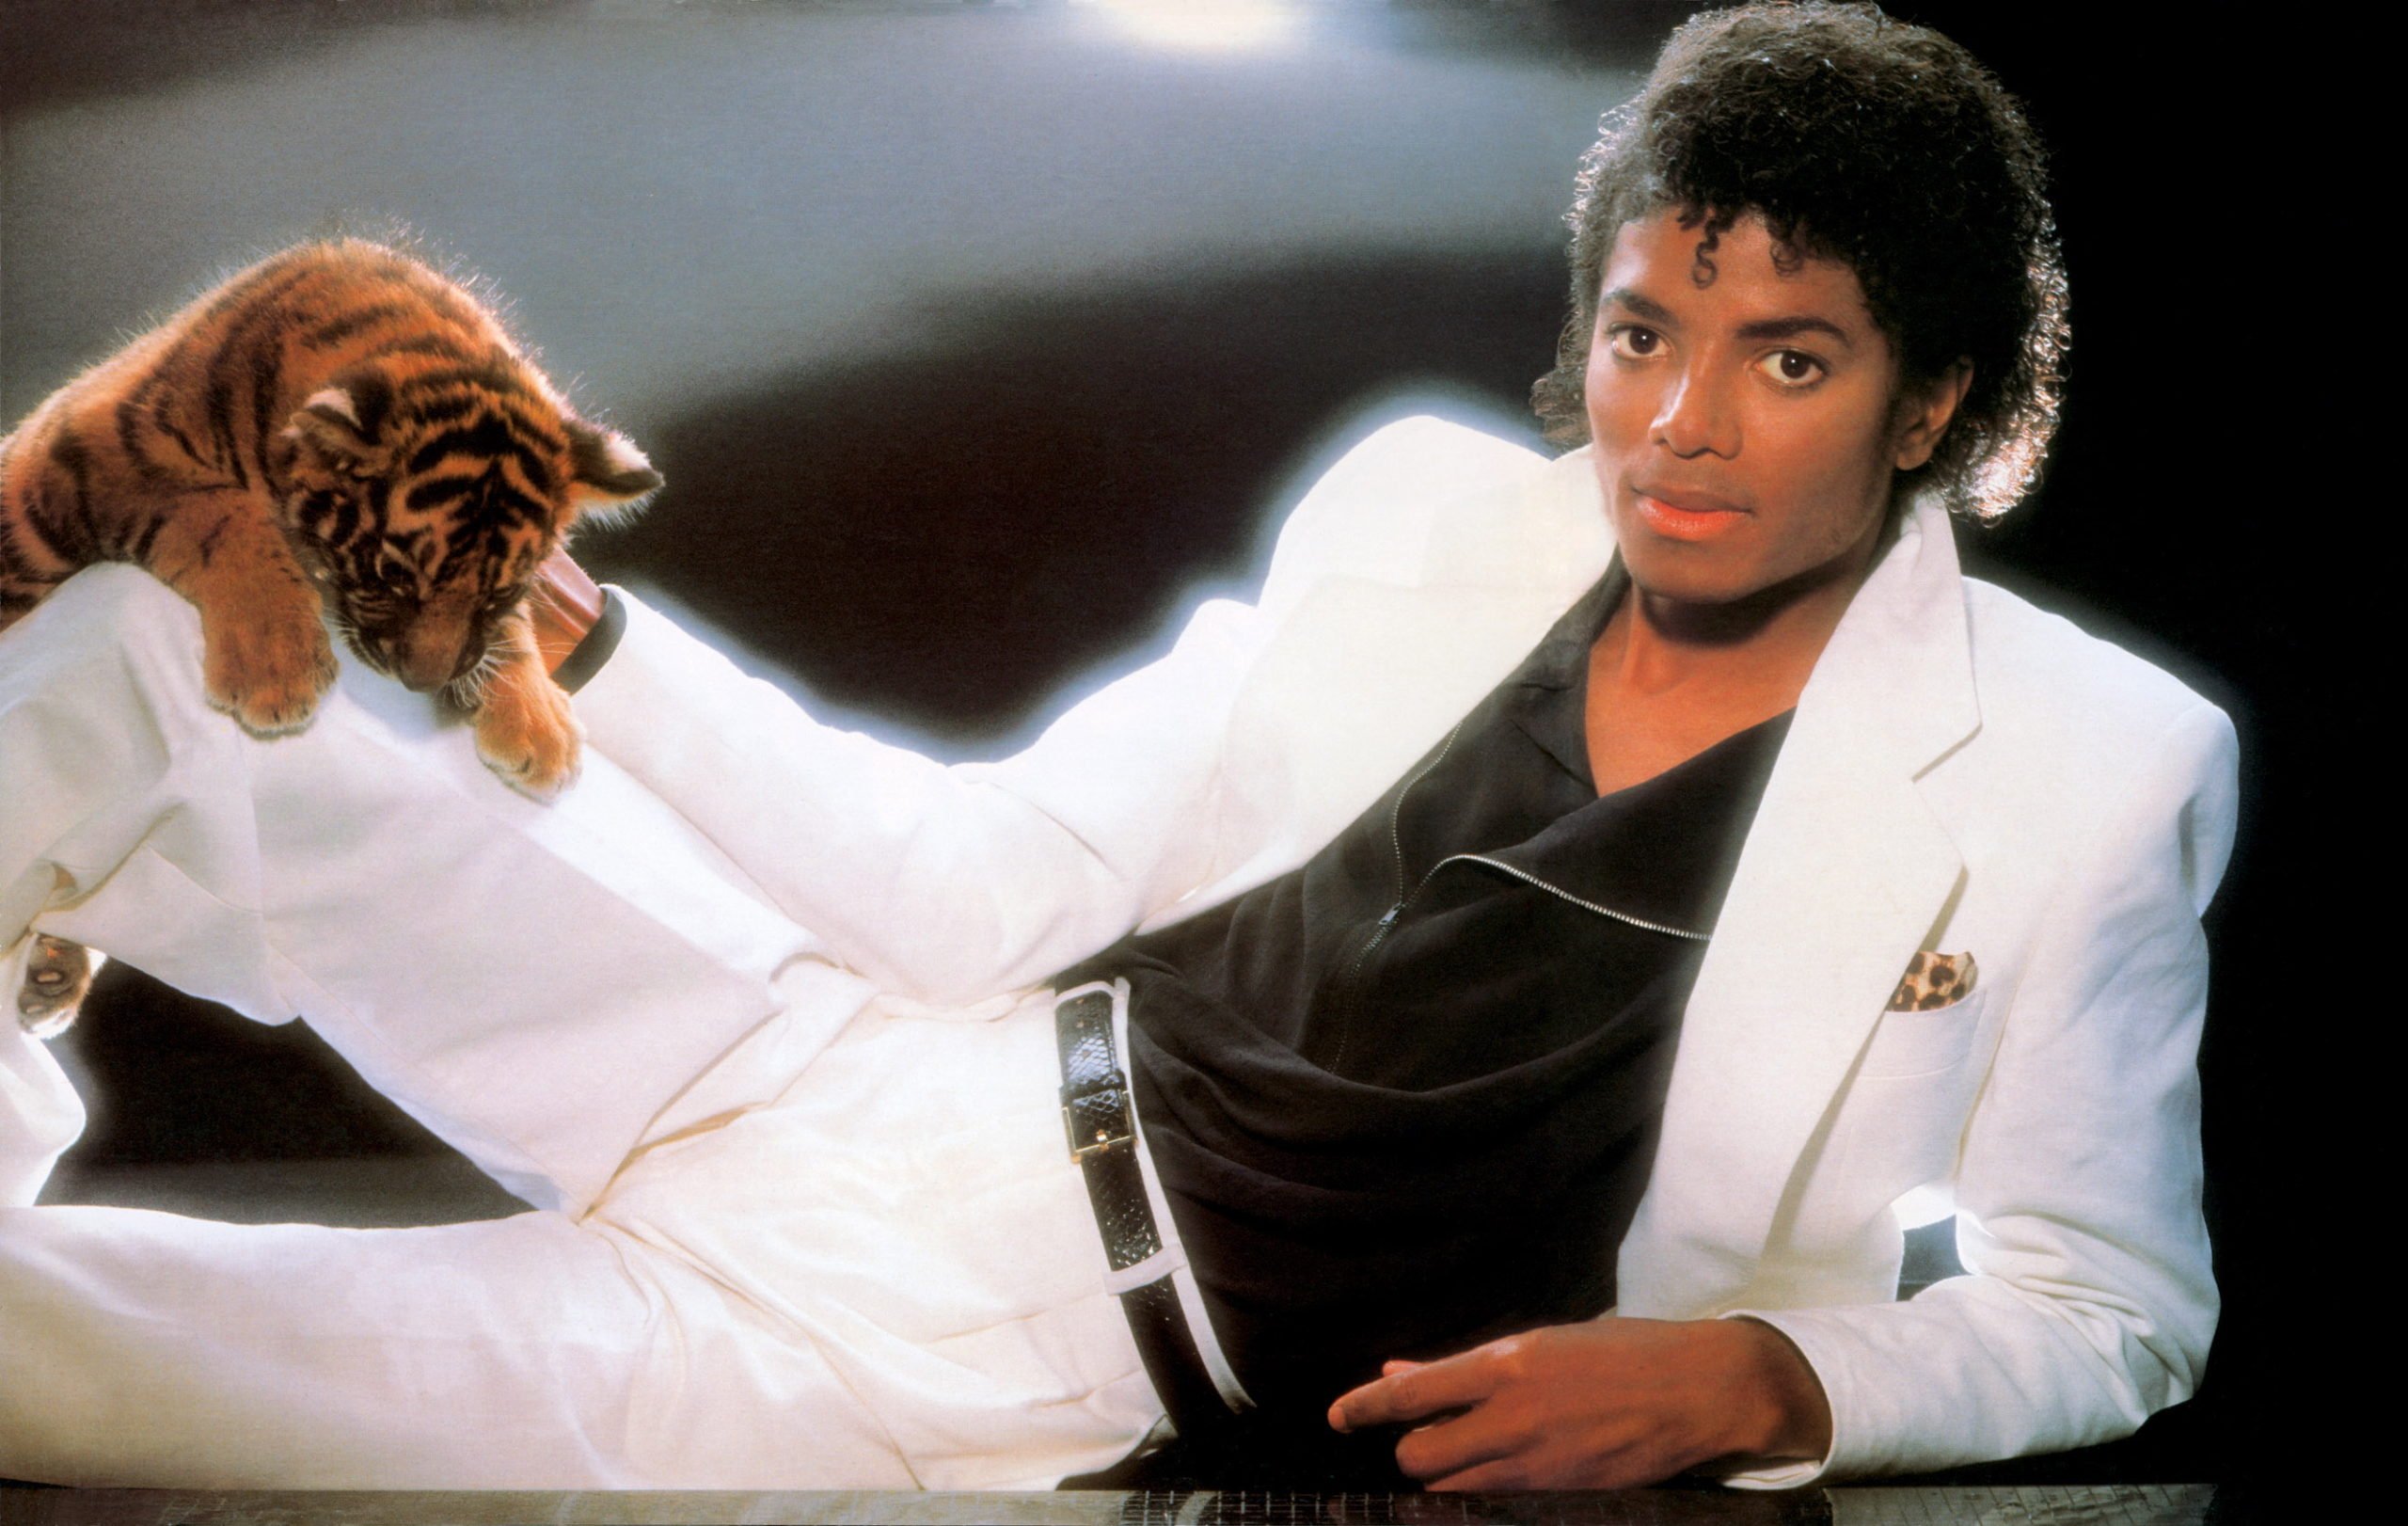 John Branca on Michael Jackson, legacy, and the music industry.